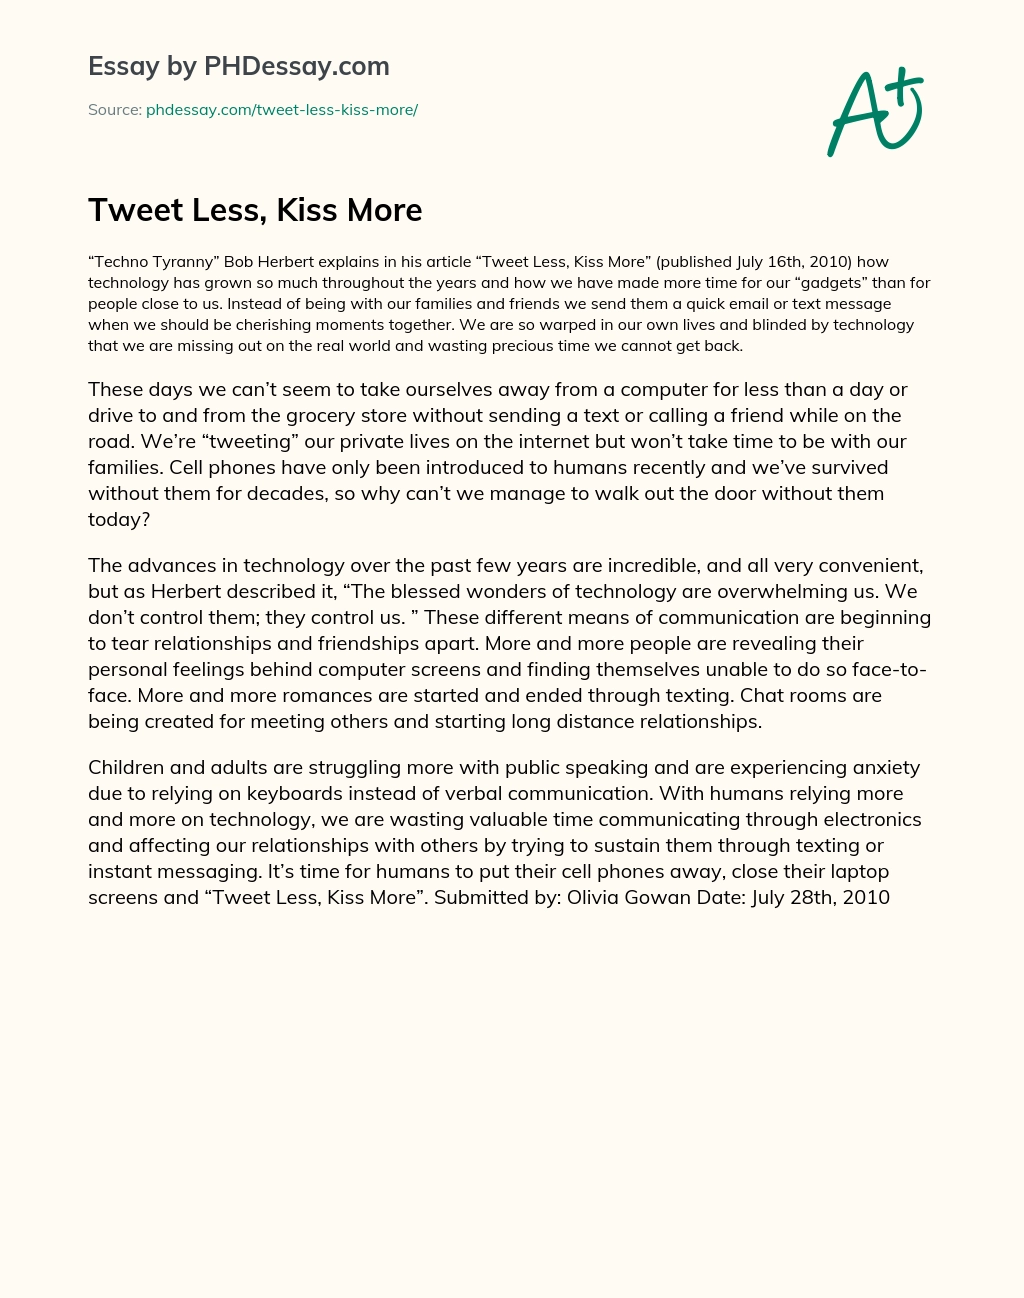 Tweet Less, Kiss More essay